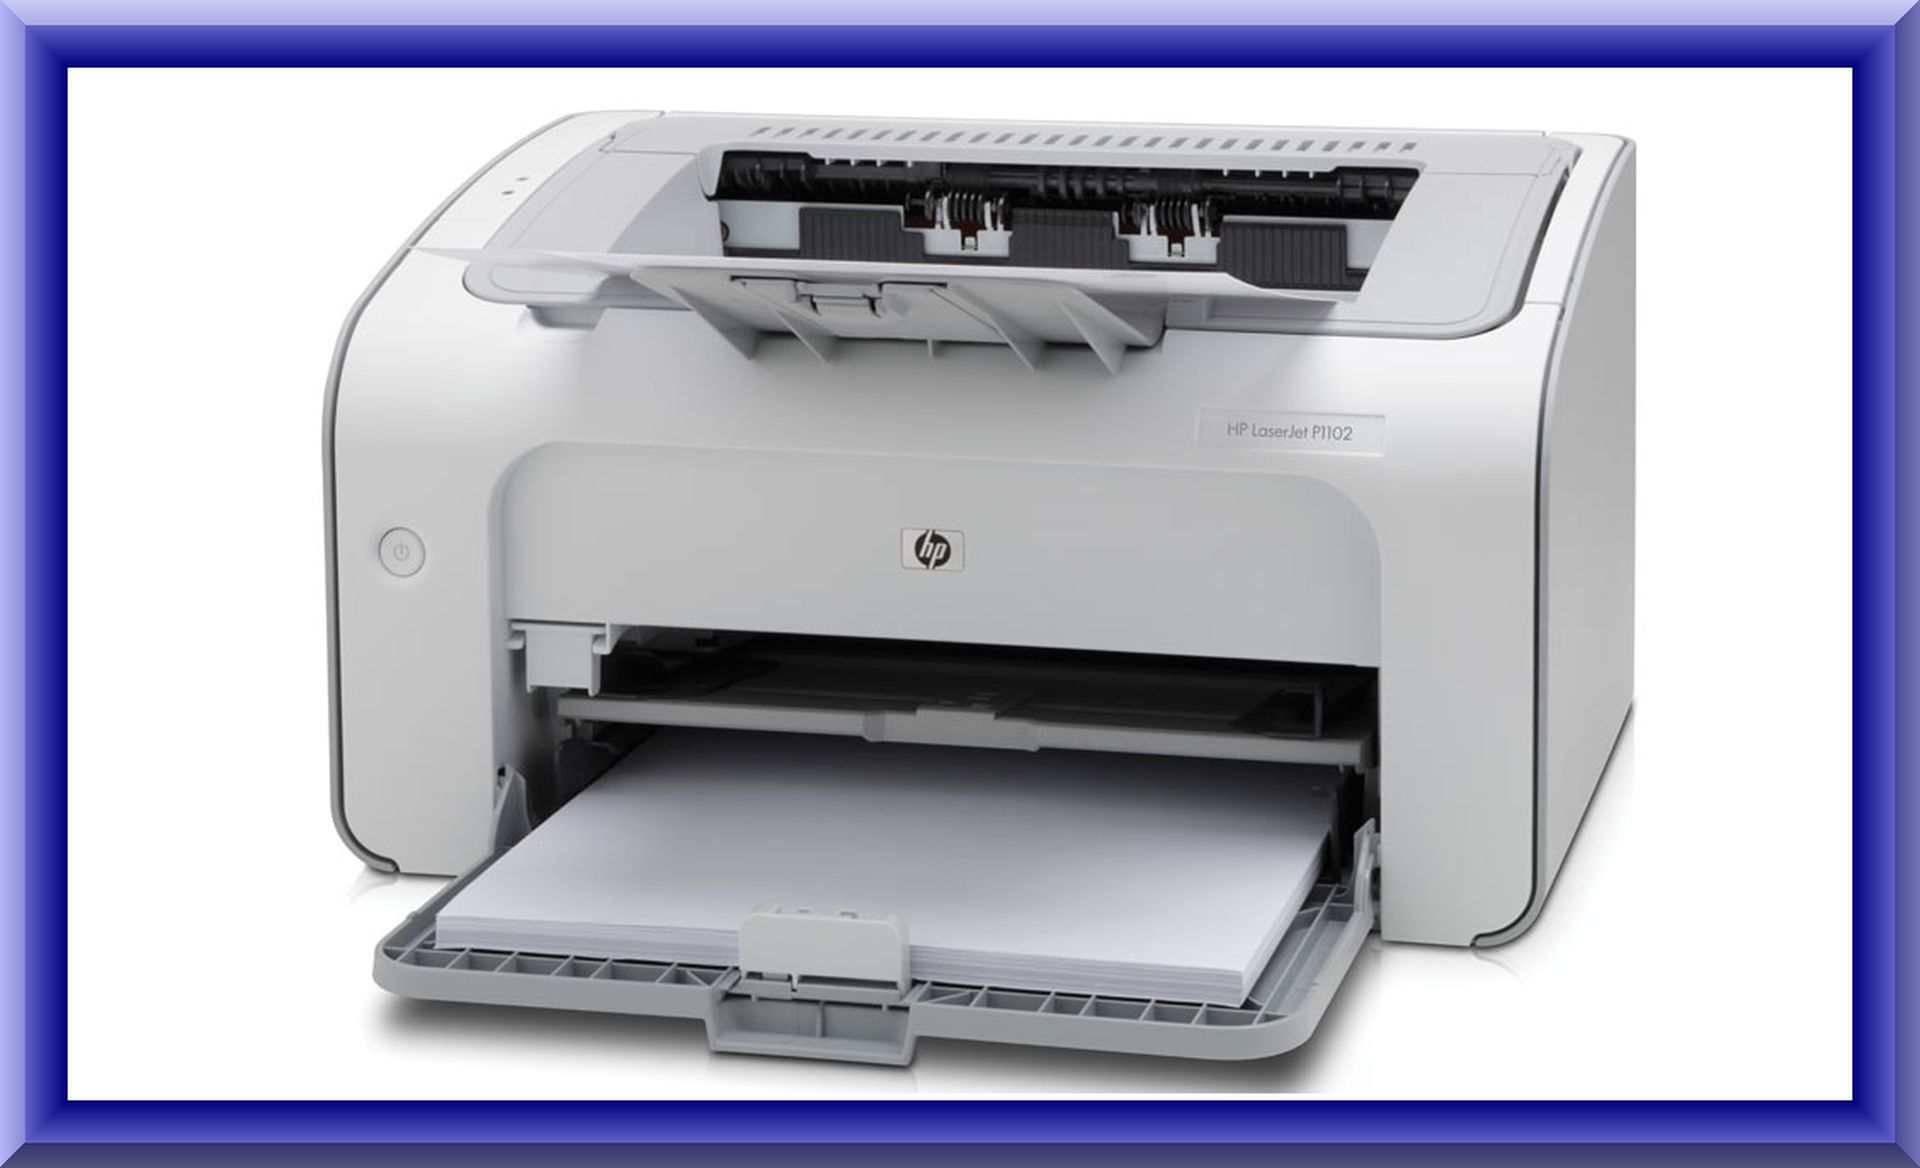 hp printer 1102 software